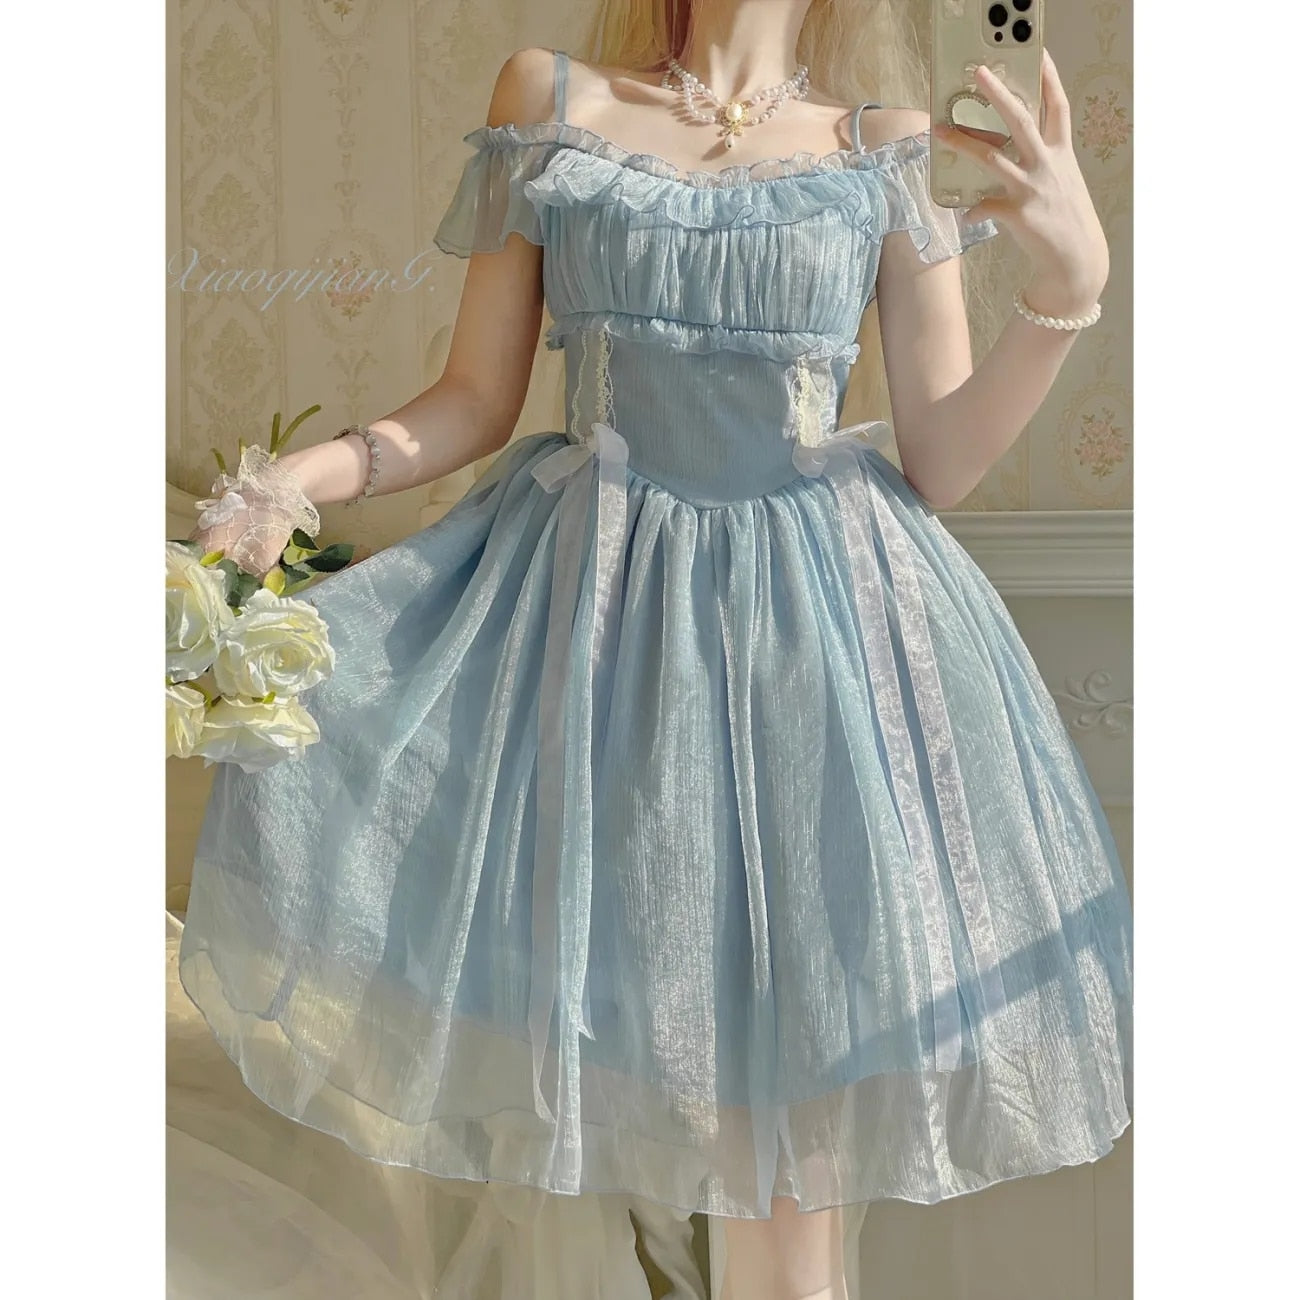 Darianrojas New Lolita Daily Wear Princess Jsk Dress Short Sweet Tea Party Lolita Fashion Chiffon Gothic Sweet Girls Evening Dress